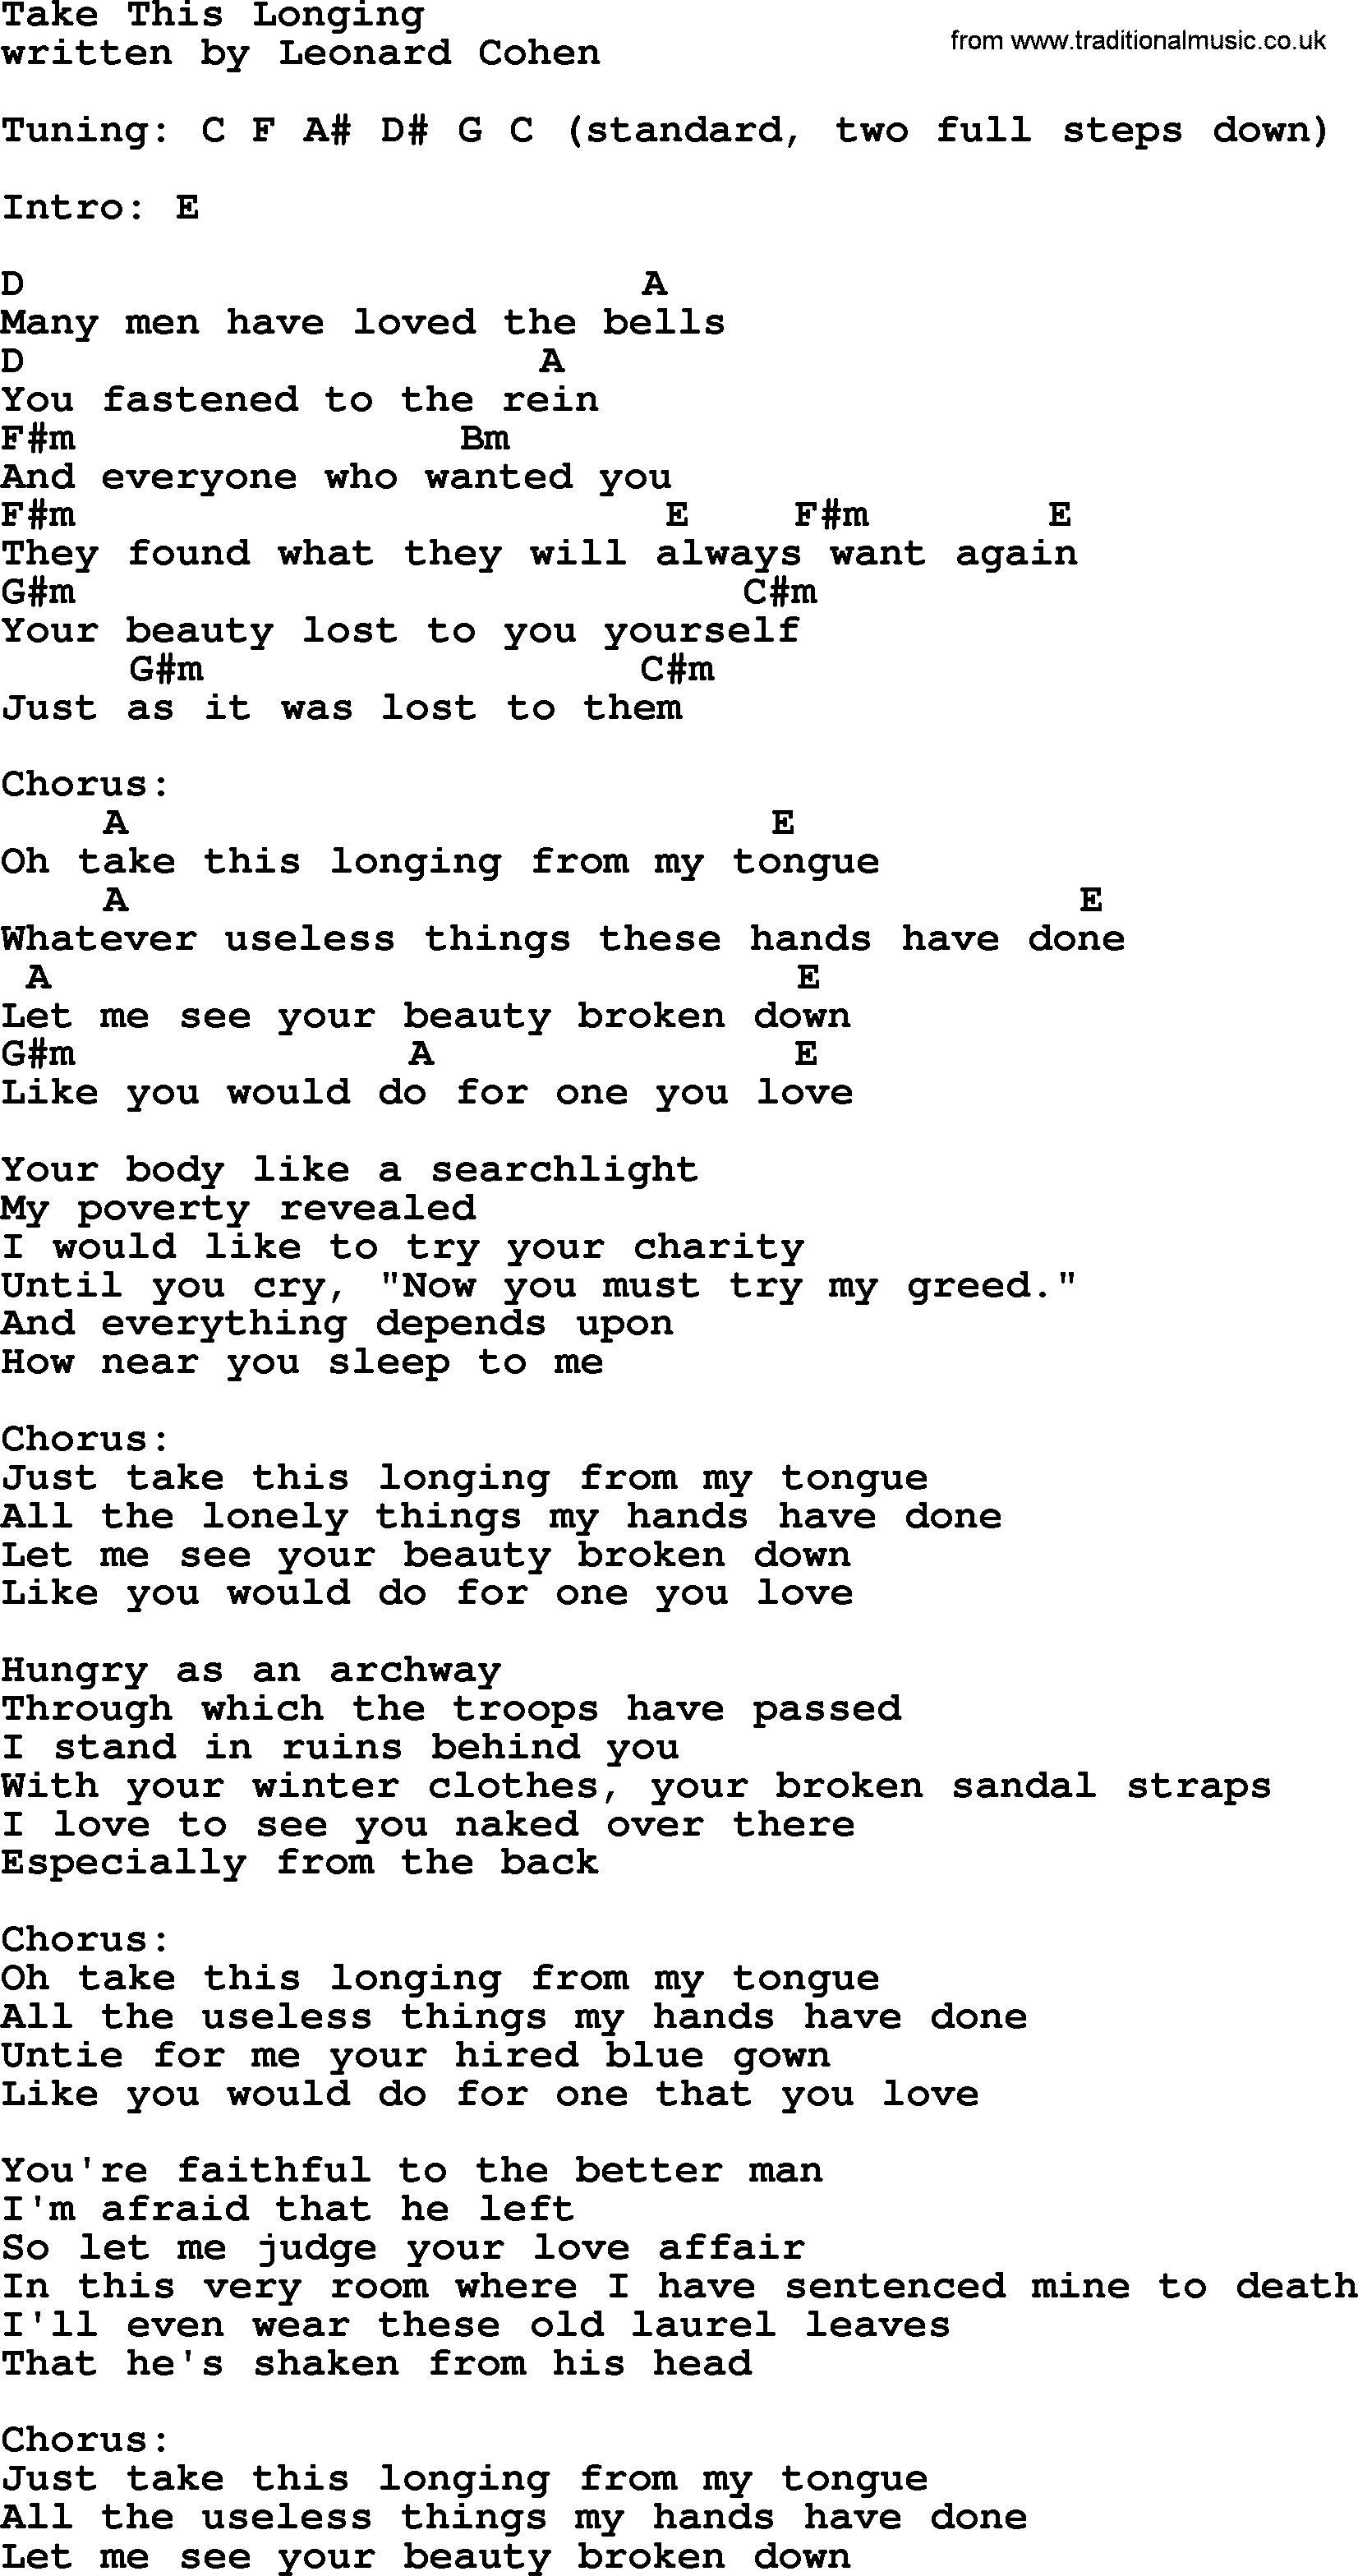 Leonard Cohen song: Take This Longing, lyrics and chords